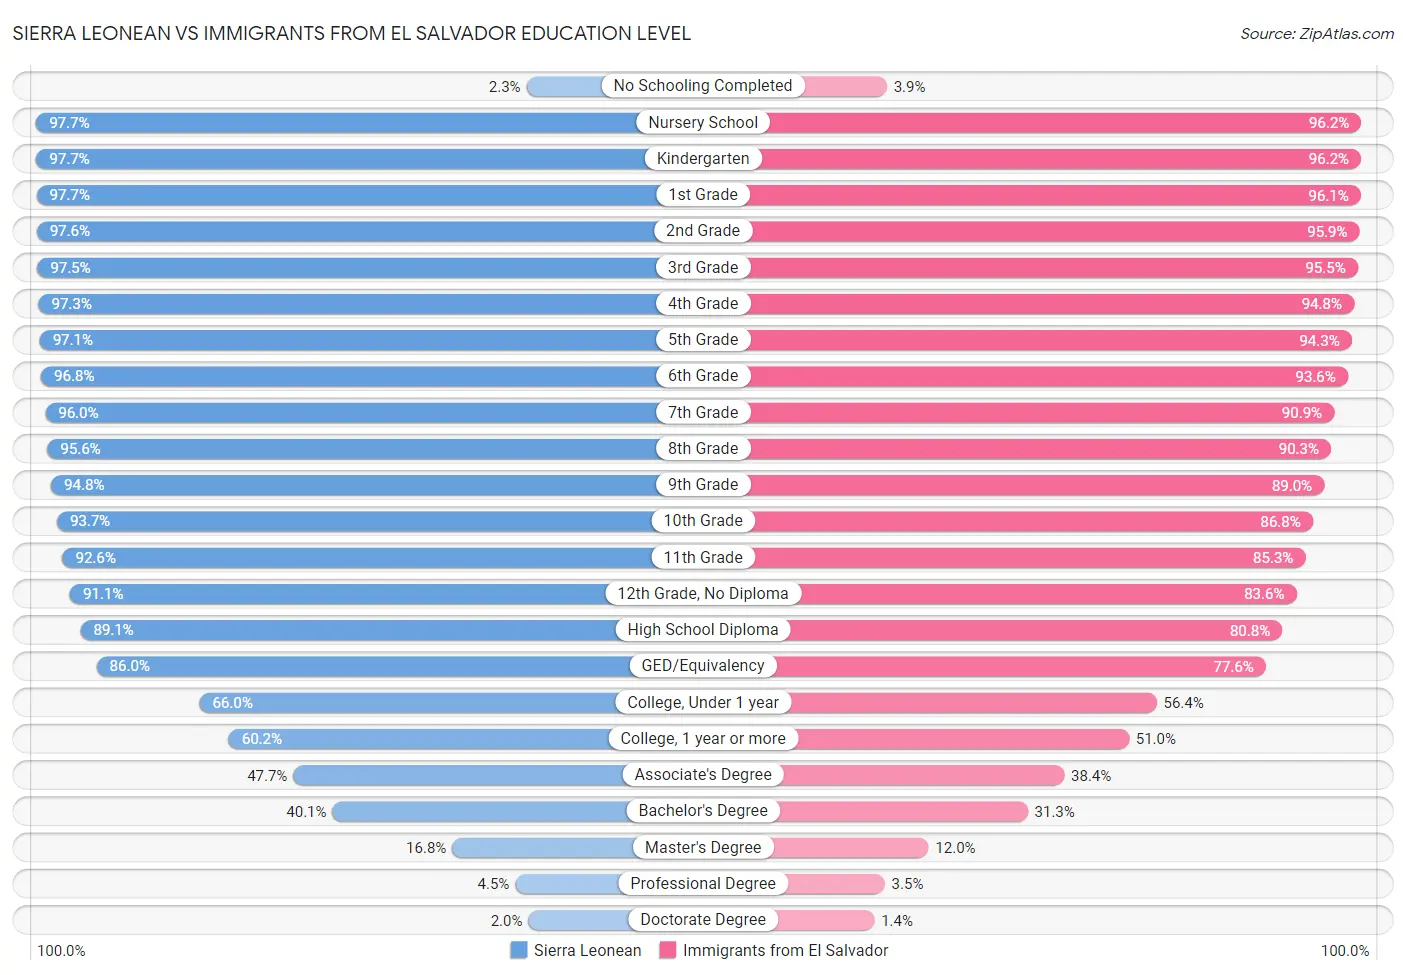 Sierra Leonean vs Immigrants from El Salvador Education Level